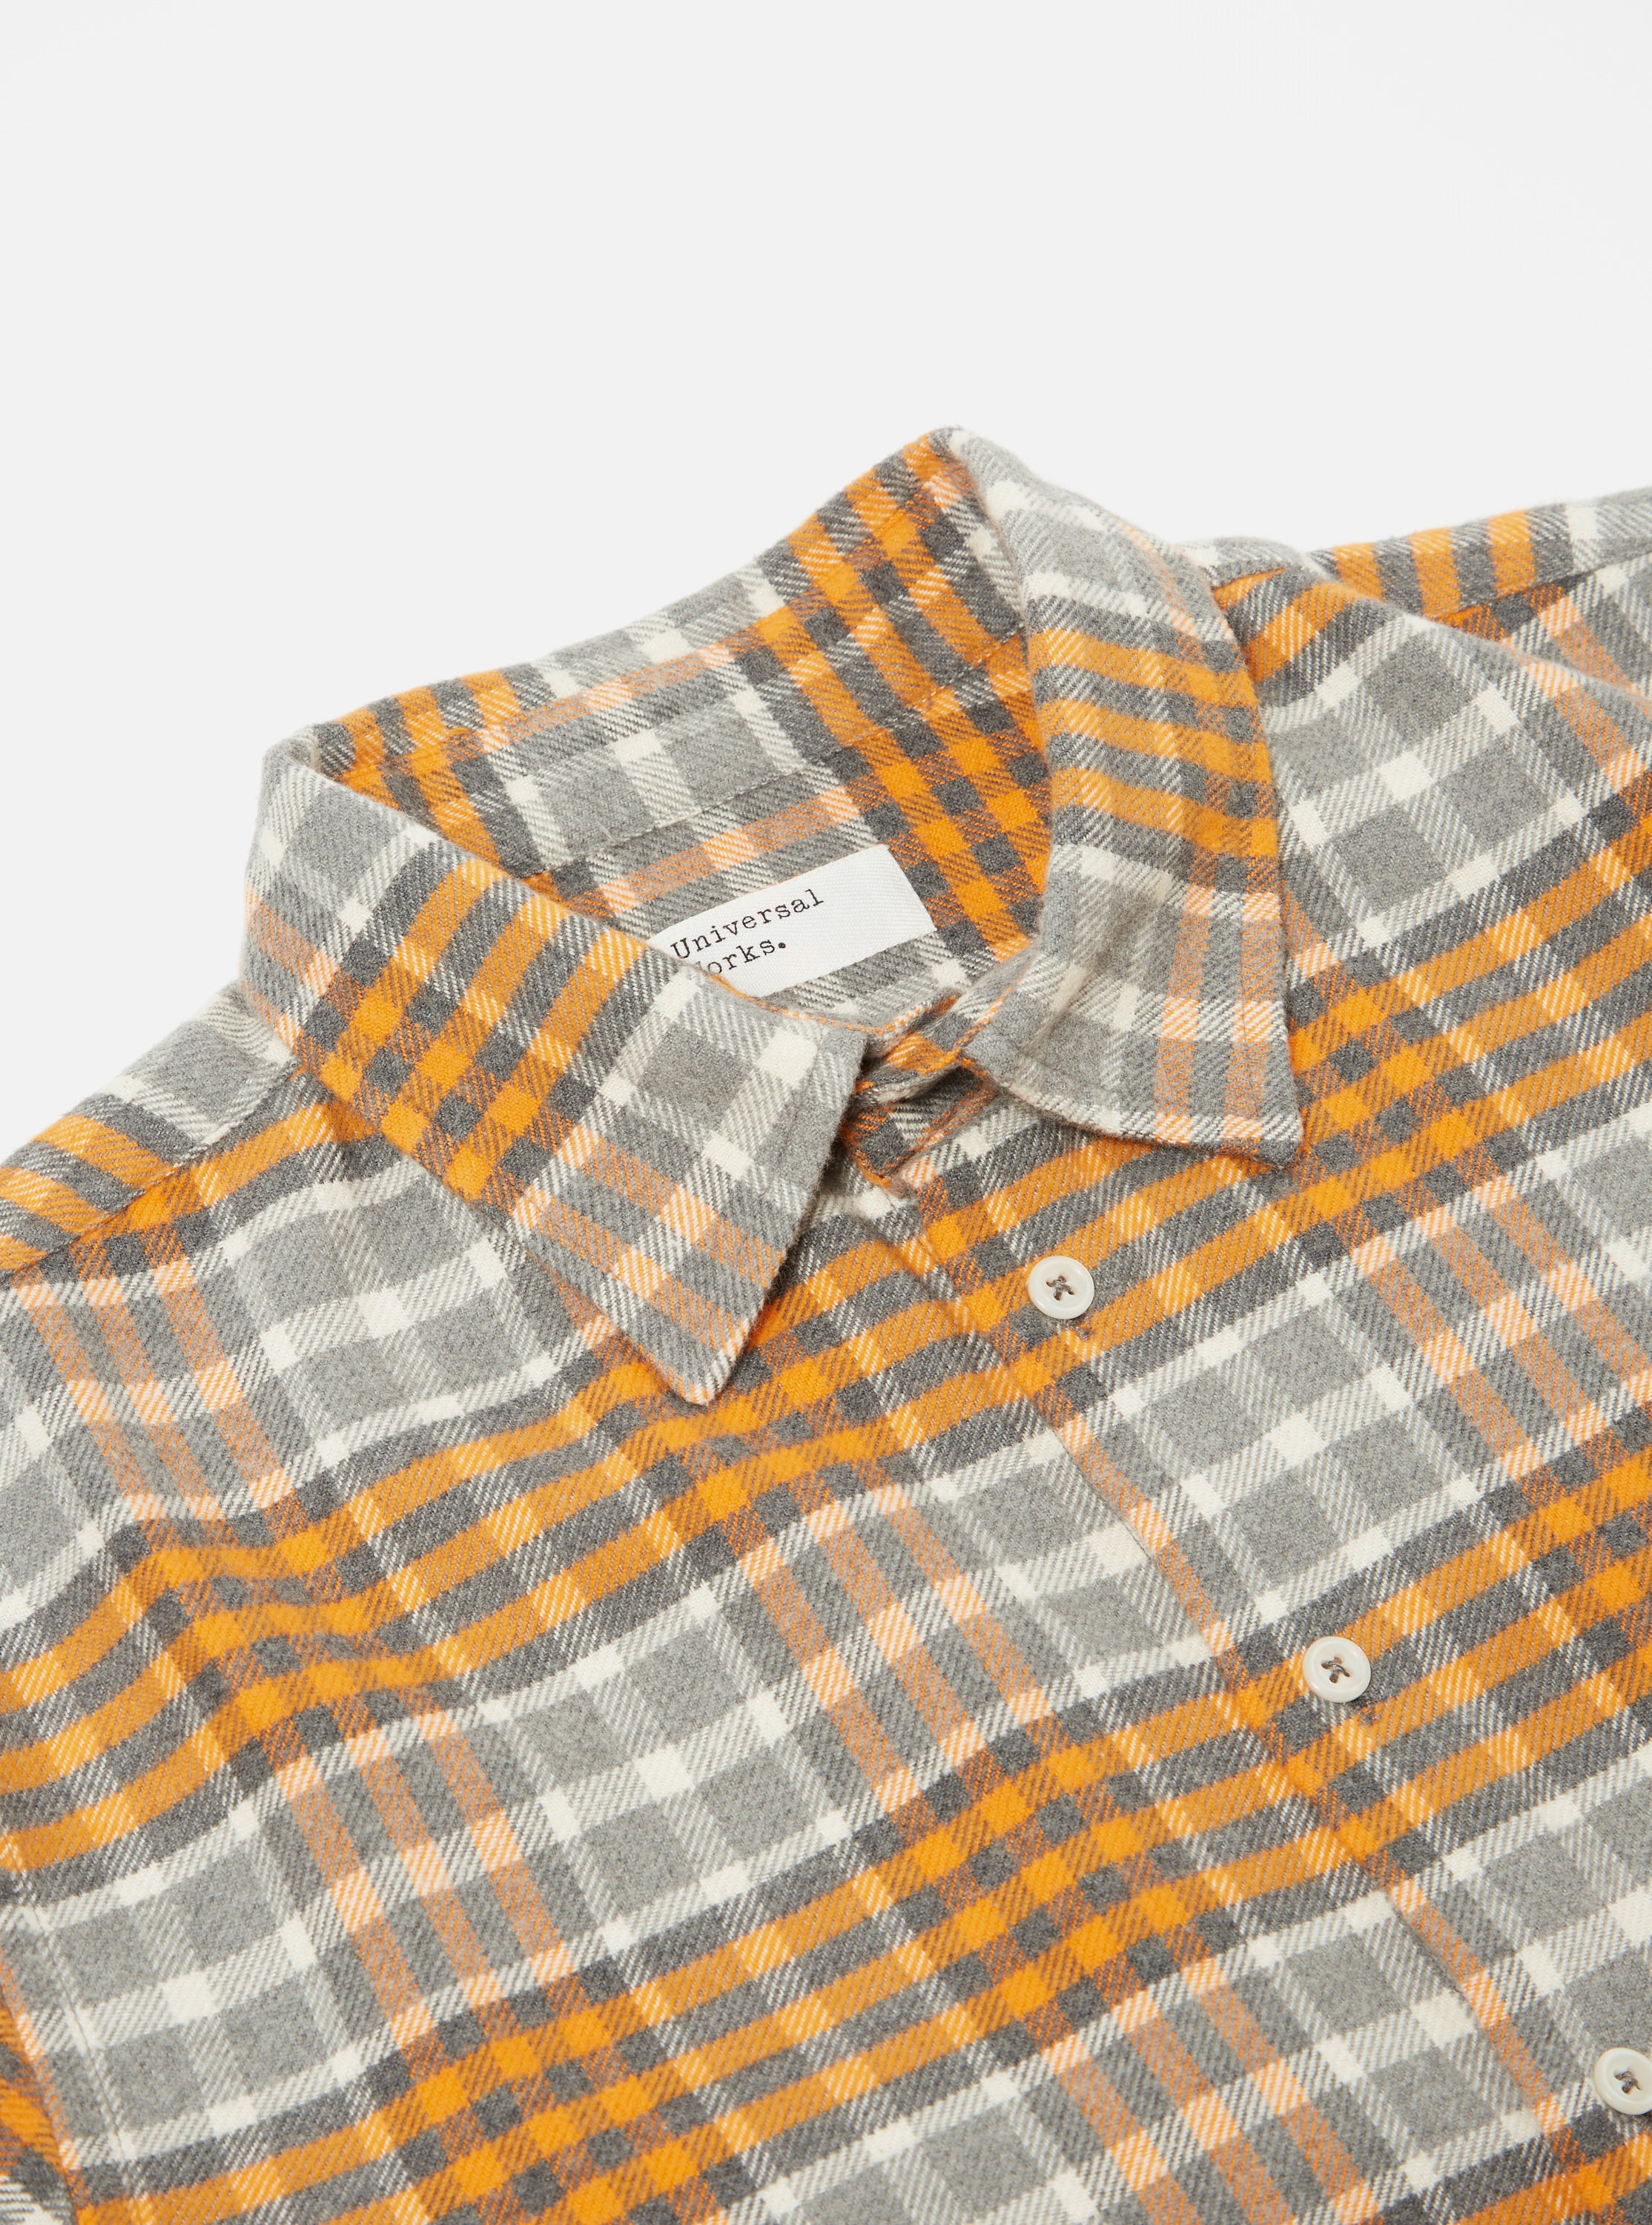 Universal Works Square Pocket Shirt in Grey Marl/Orange Brushed Cotton Plaid